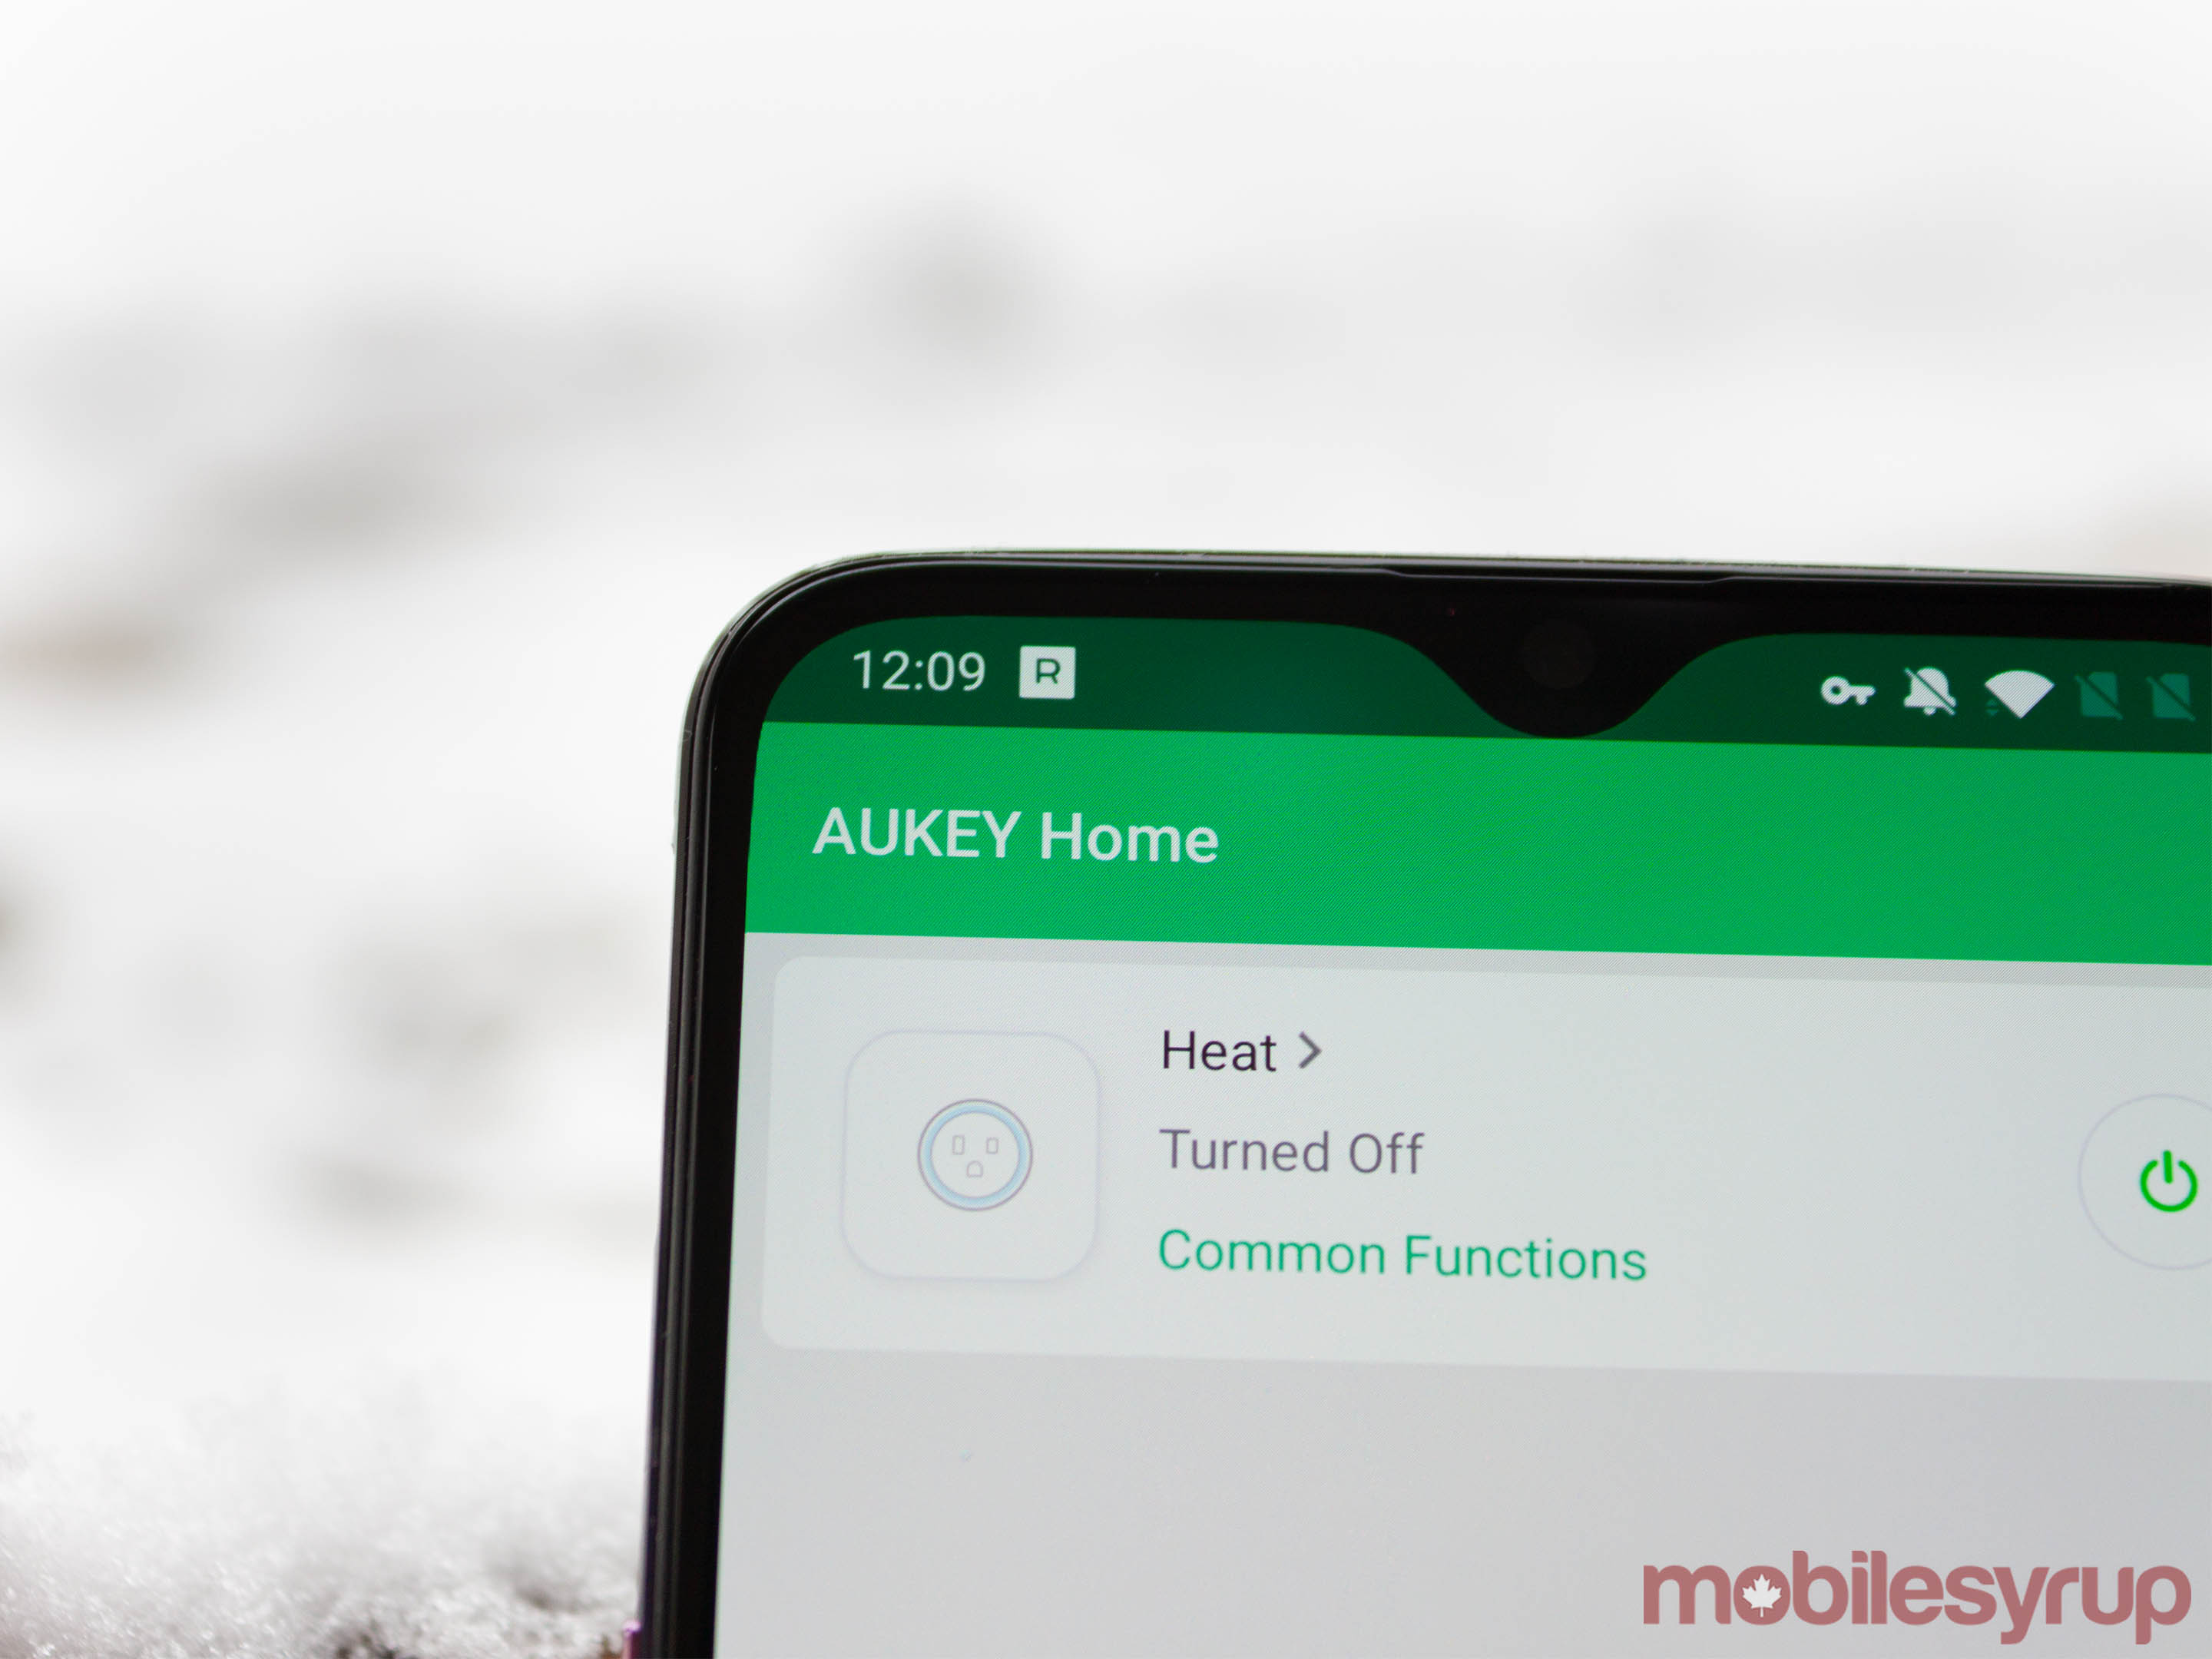 Aukey Home app